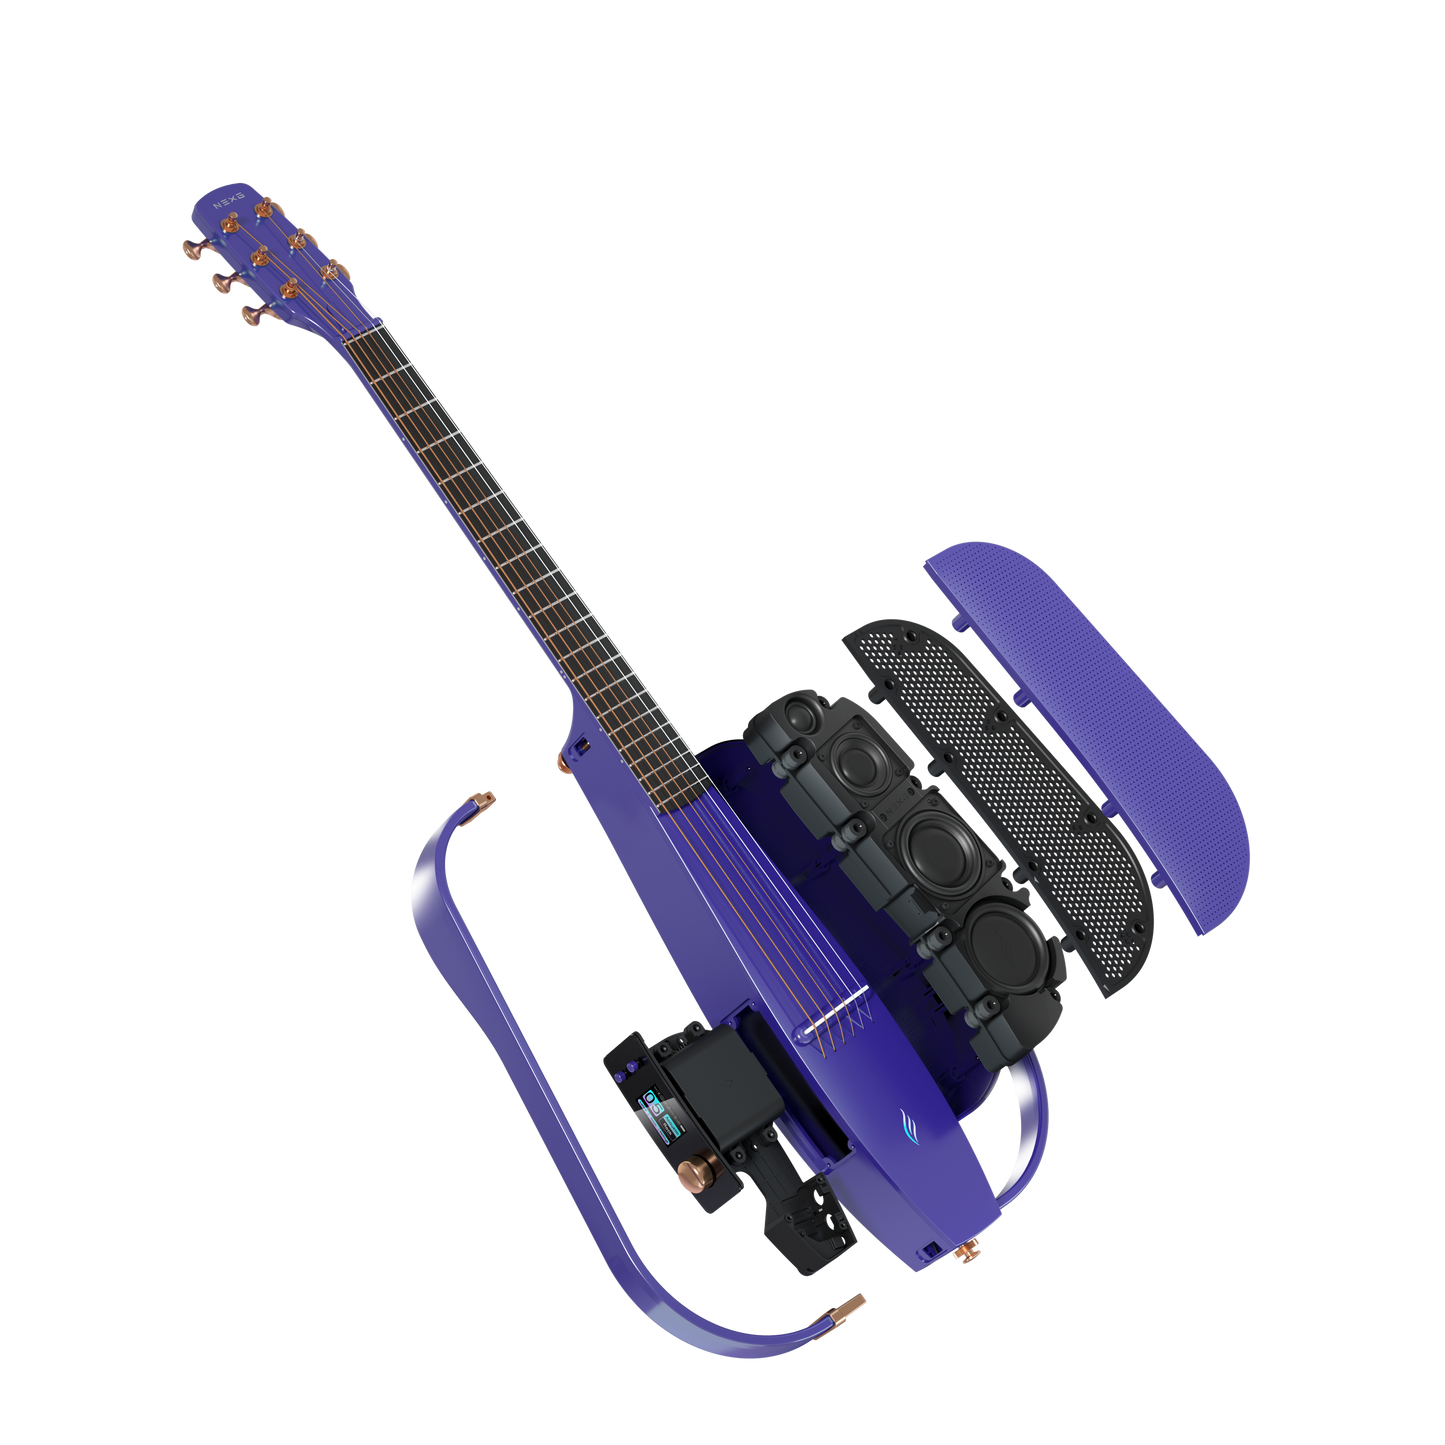 ENYA NEXG 2 Carbon Fiber Guitar Purple (Deluxe)